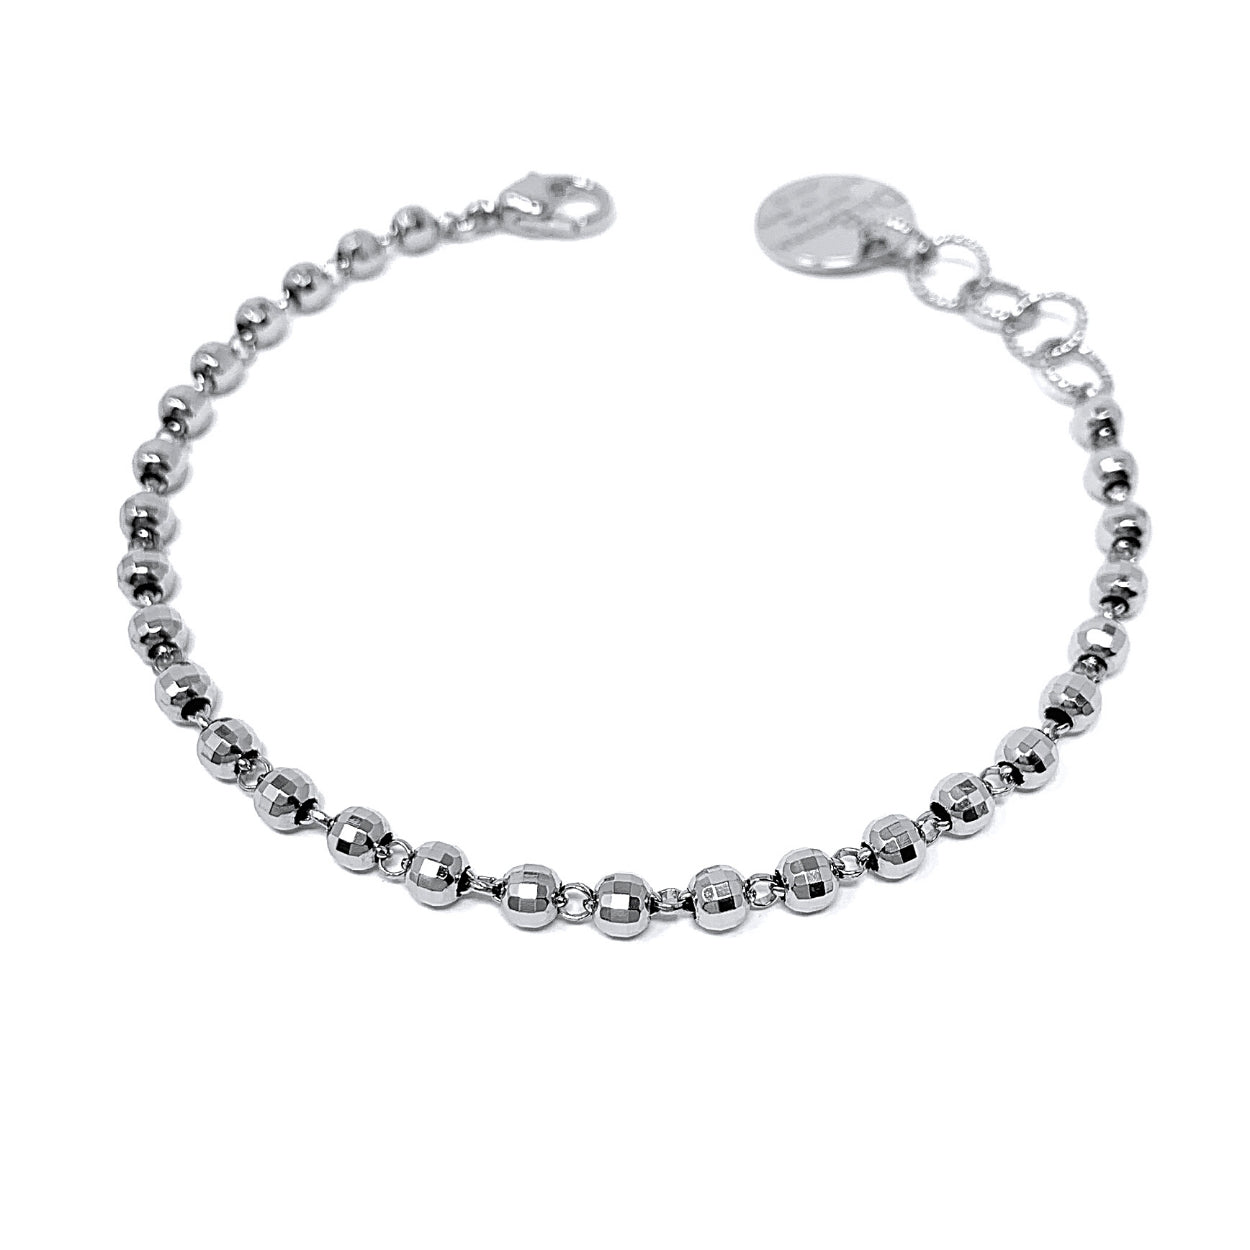 Diamond Beads Bracelet in Silver